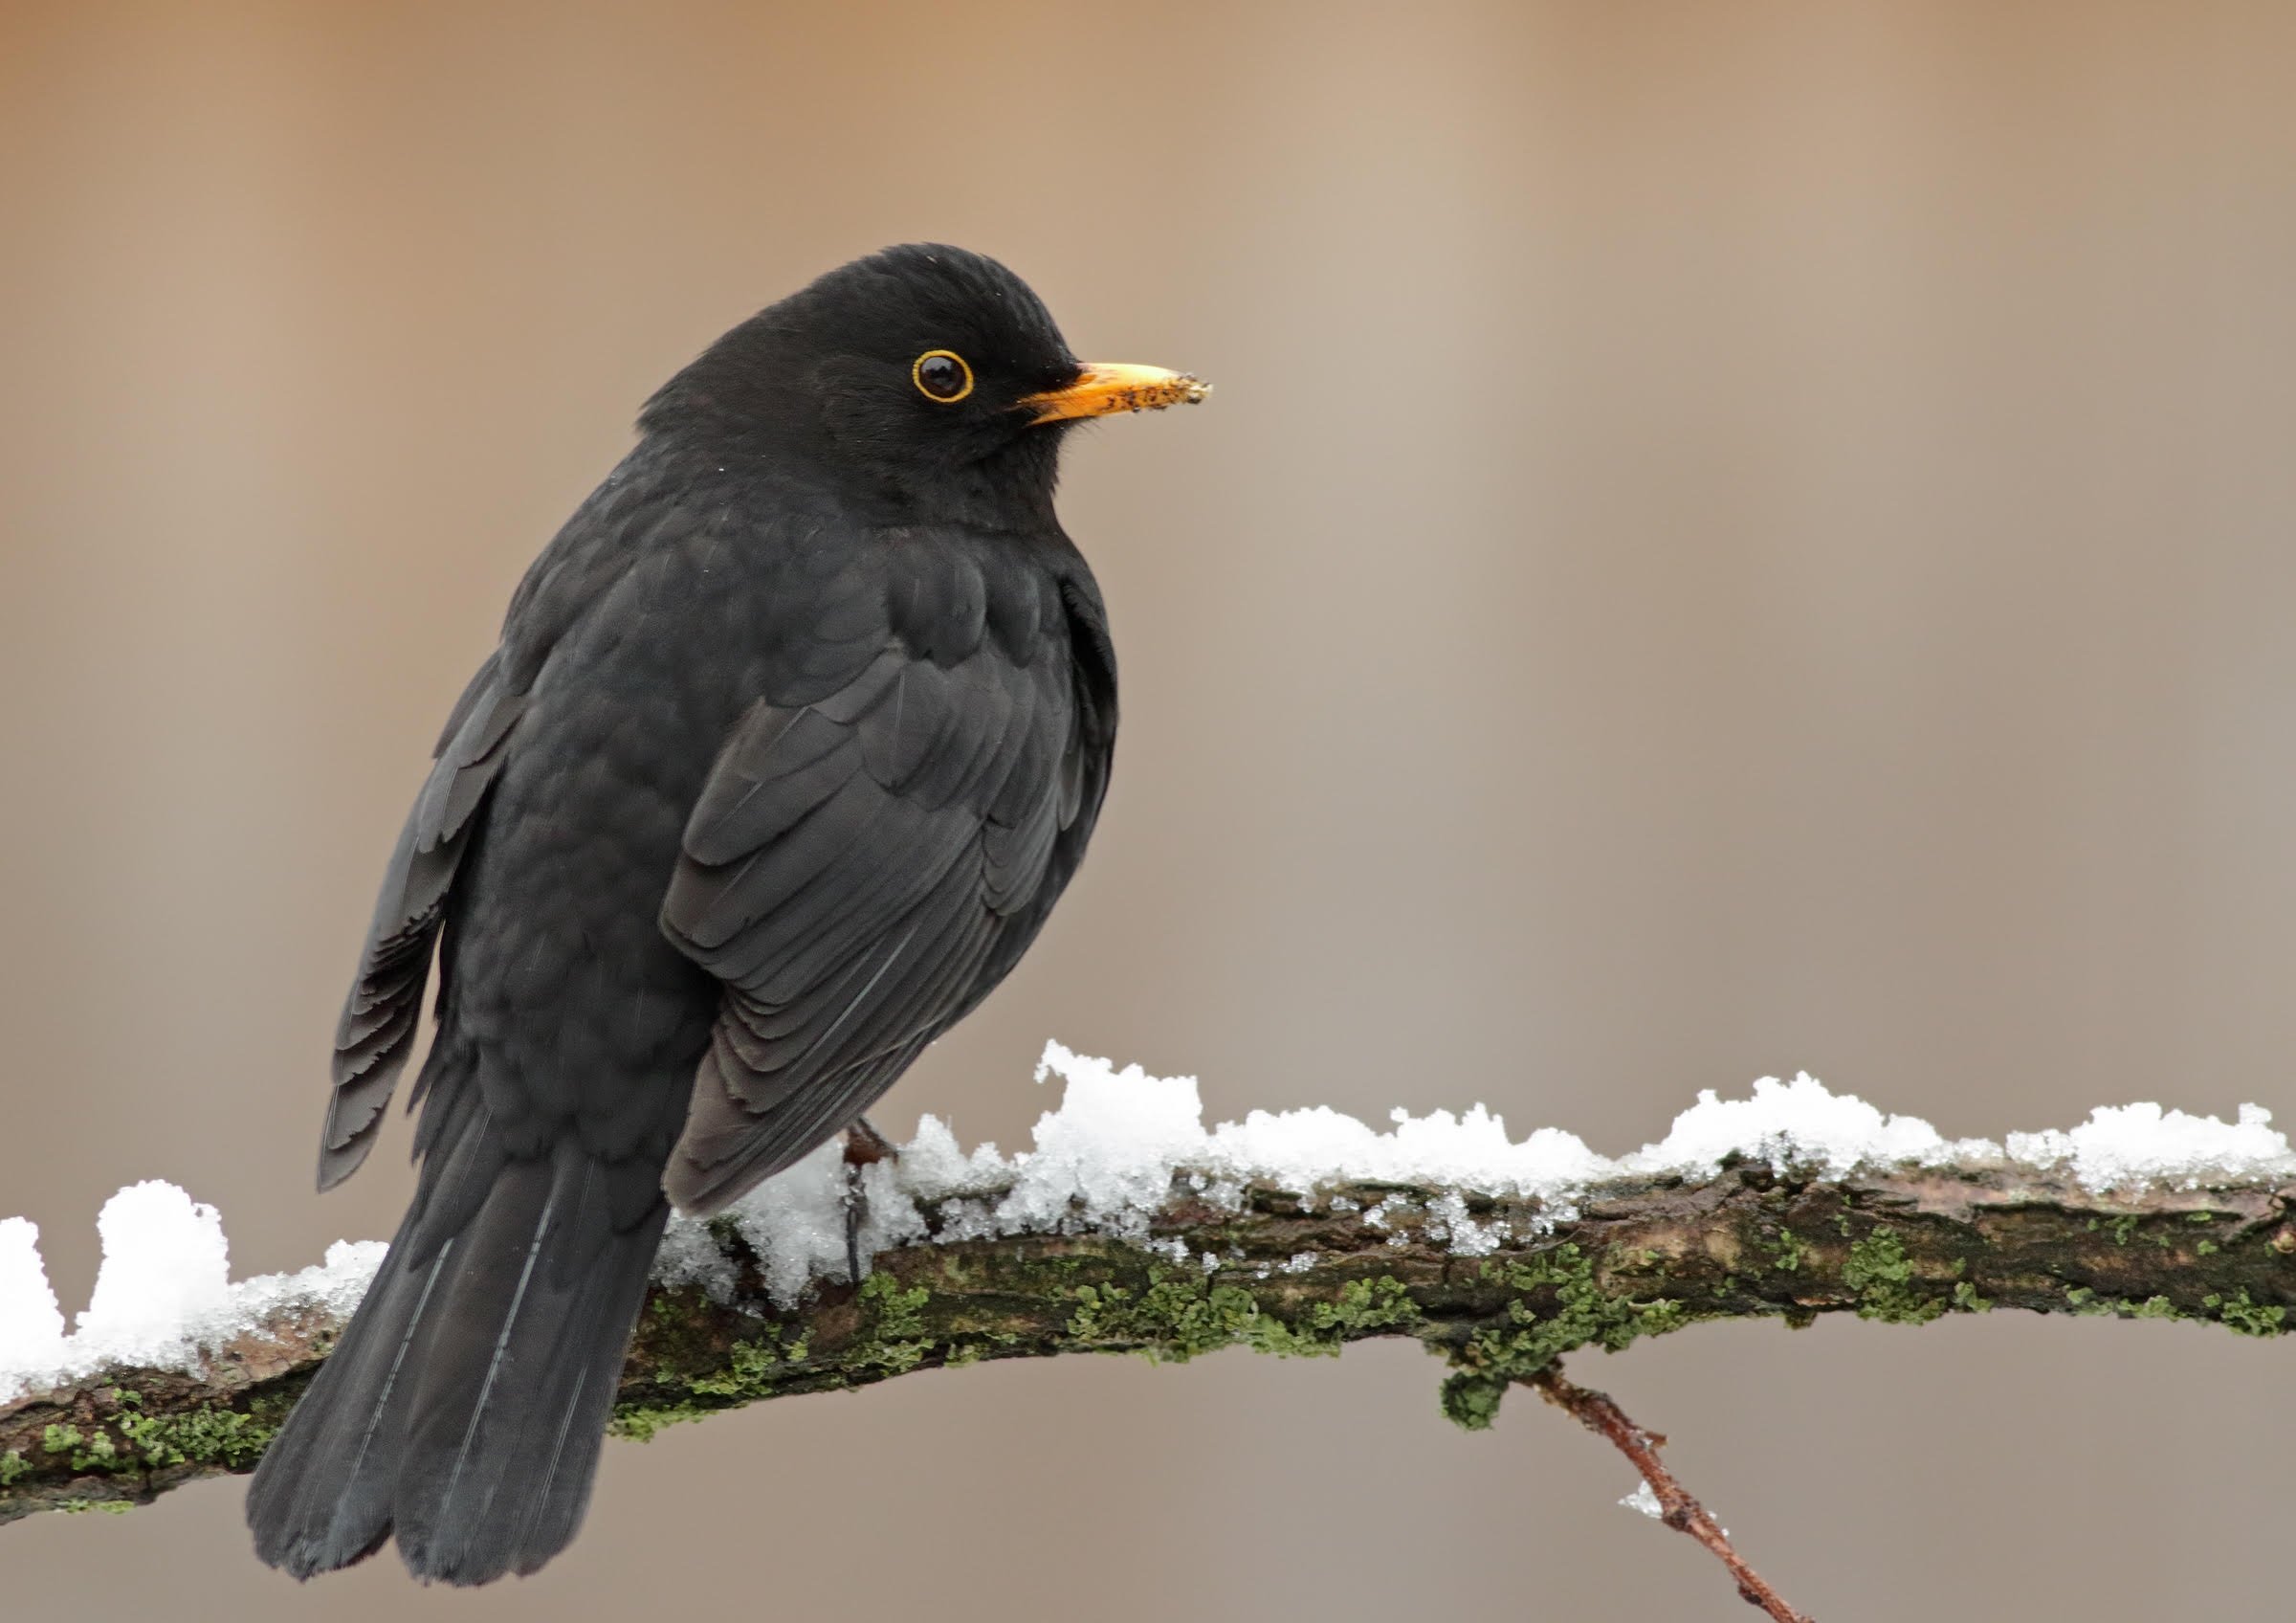 City-dwelling blackbirds have poorer measures of health